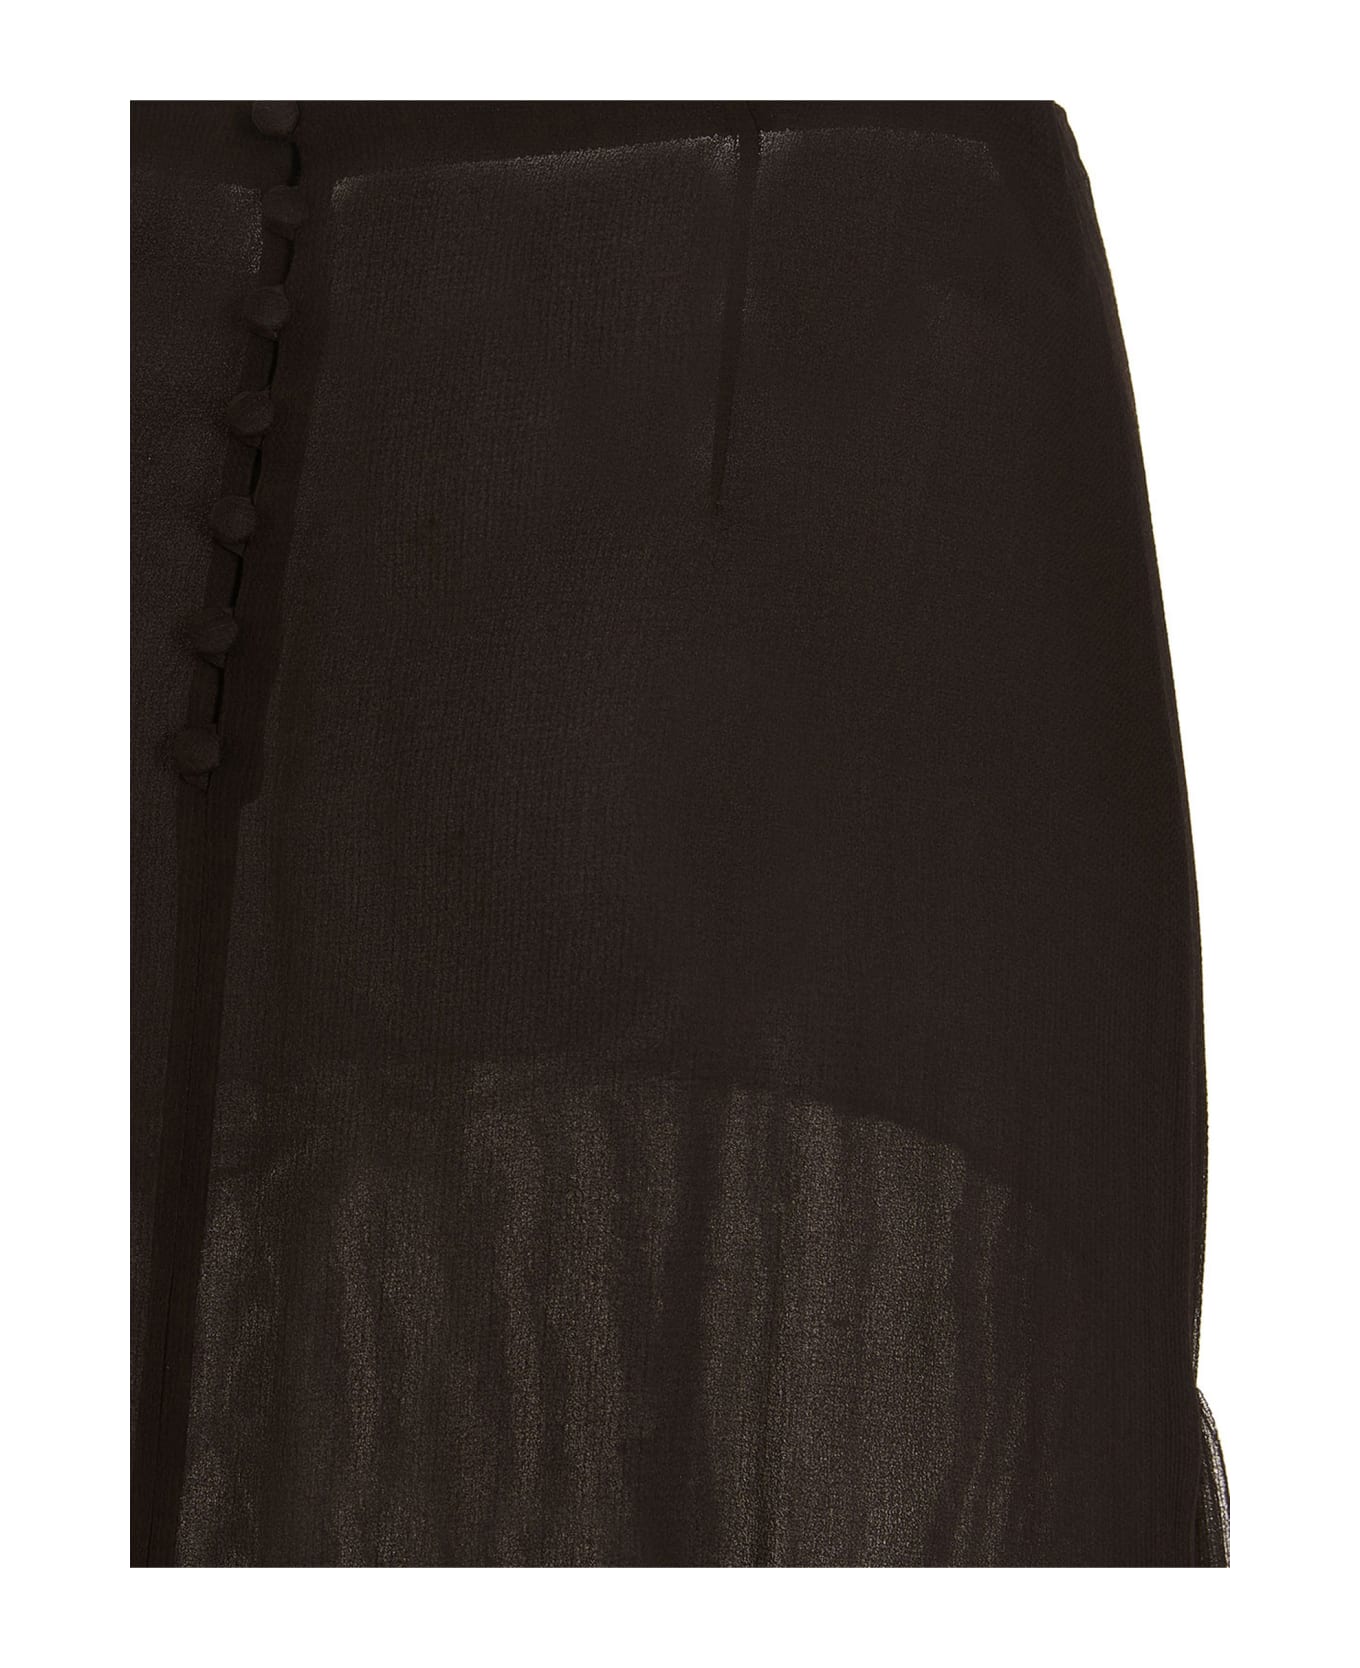 Saint Laurent Flounced Long Skirt - Brown